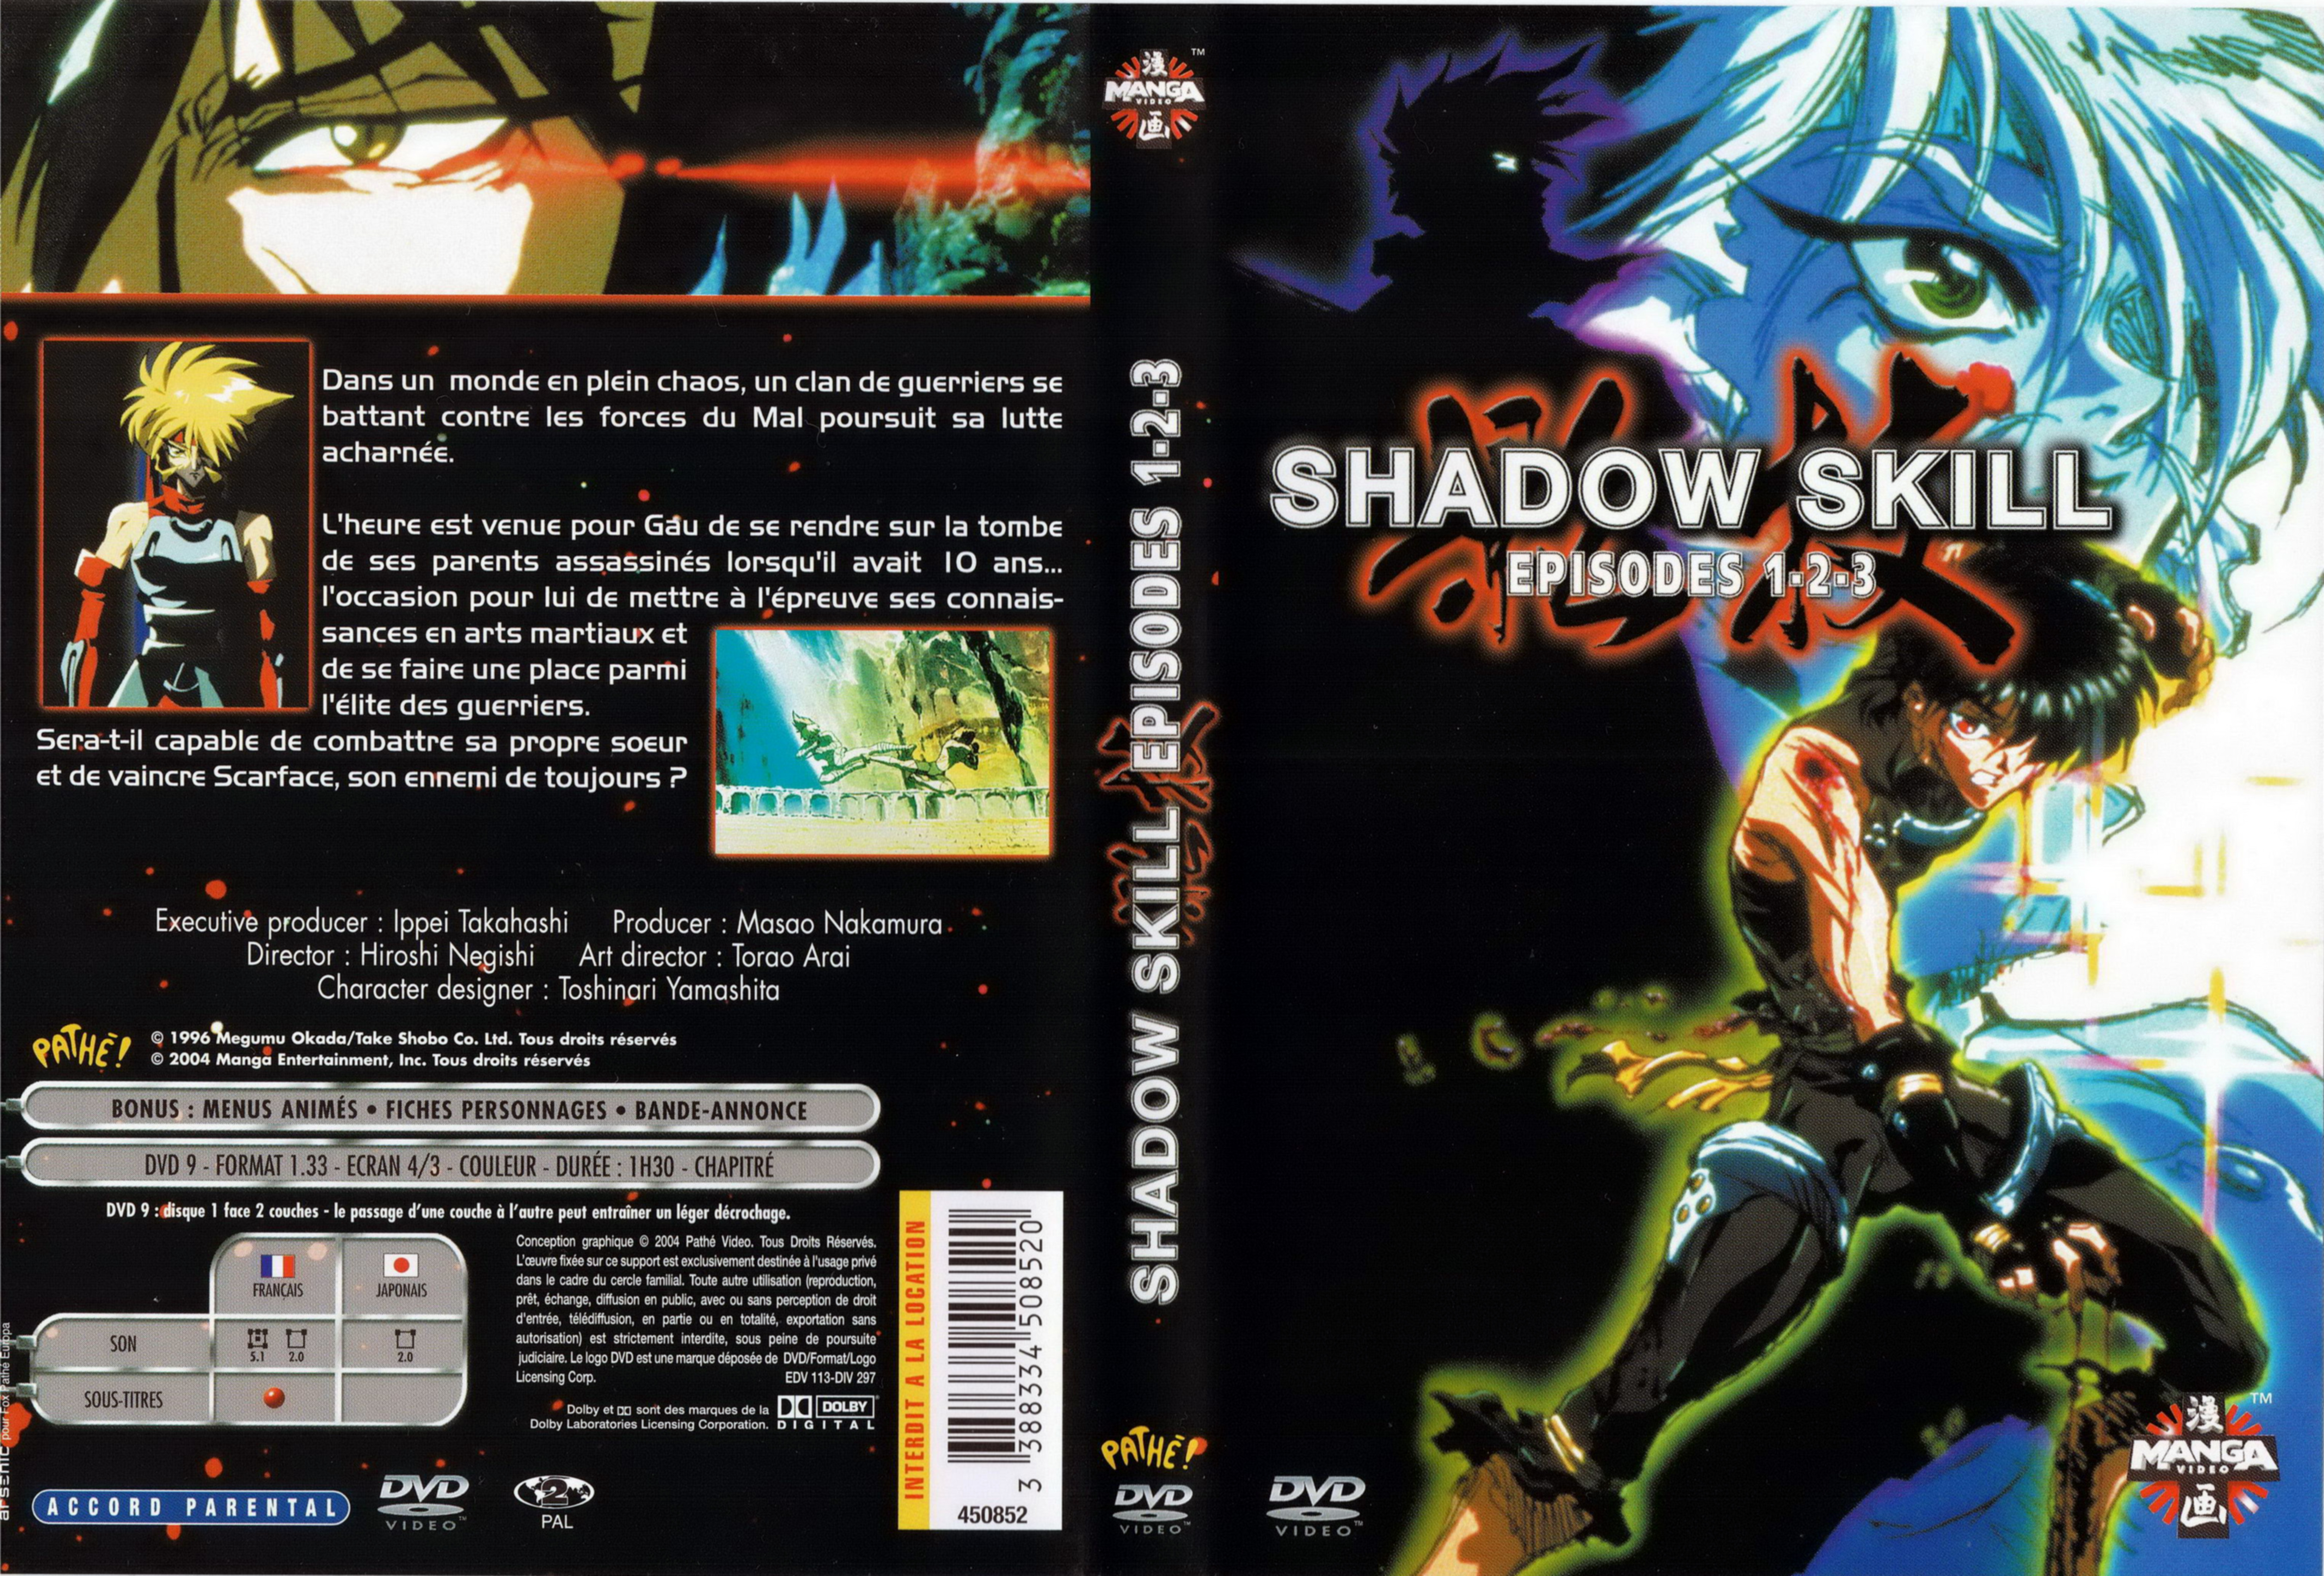 Jaquette DVD Shadow skill vol 1